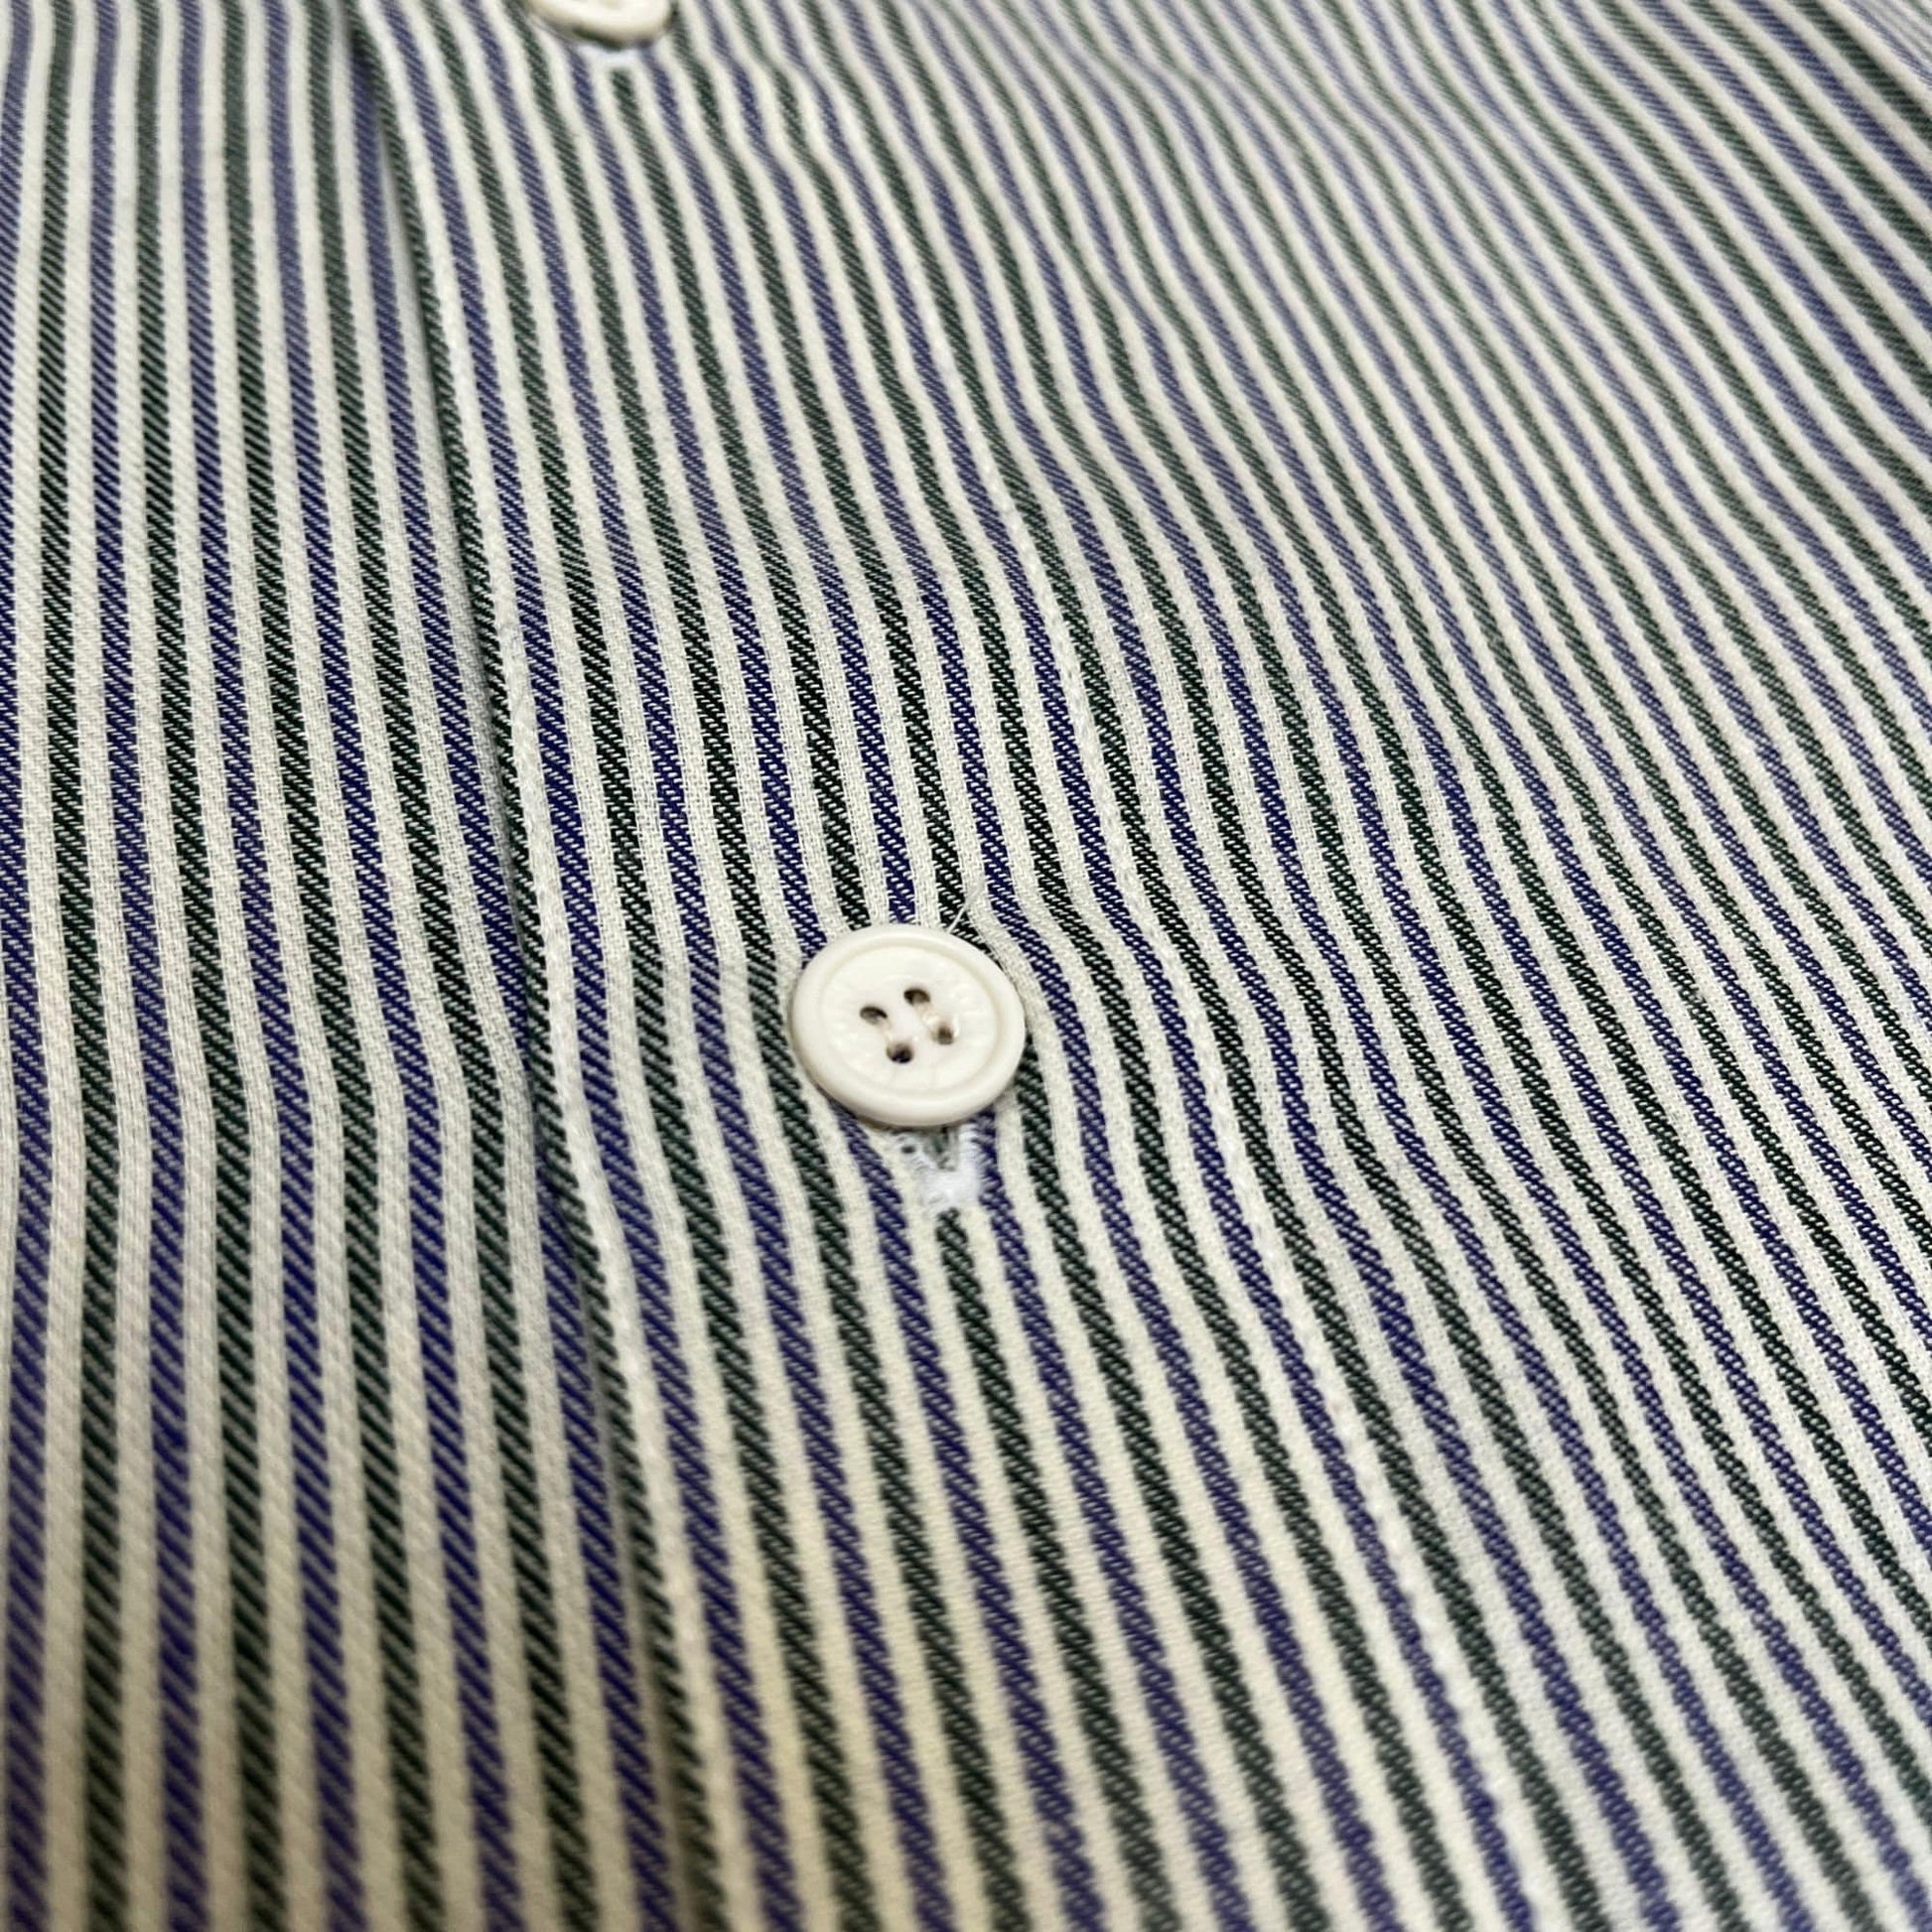 90s Missoni Sport shirt, vintage men's striped button down shirt by Missoni, 1990s purple green and white oxford